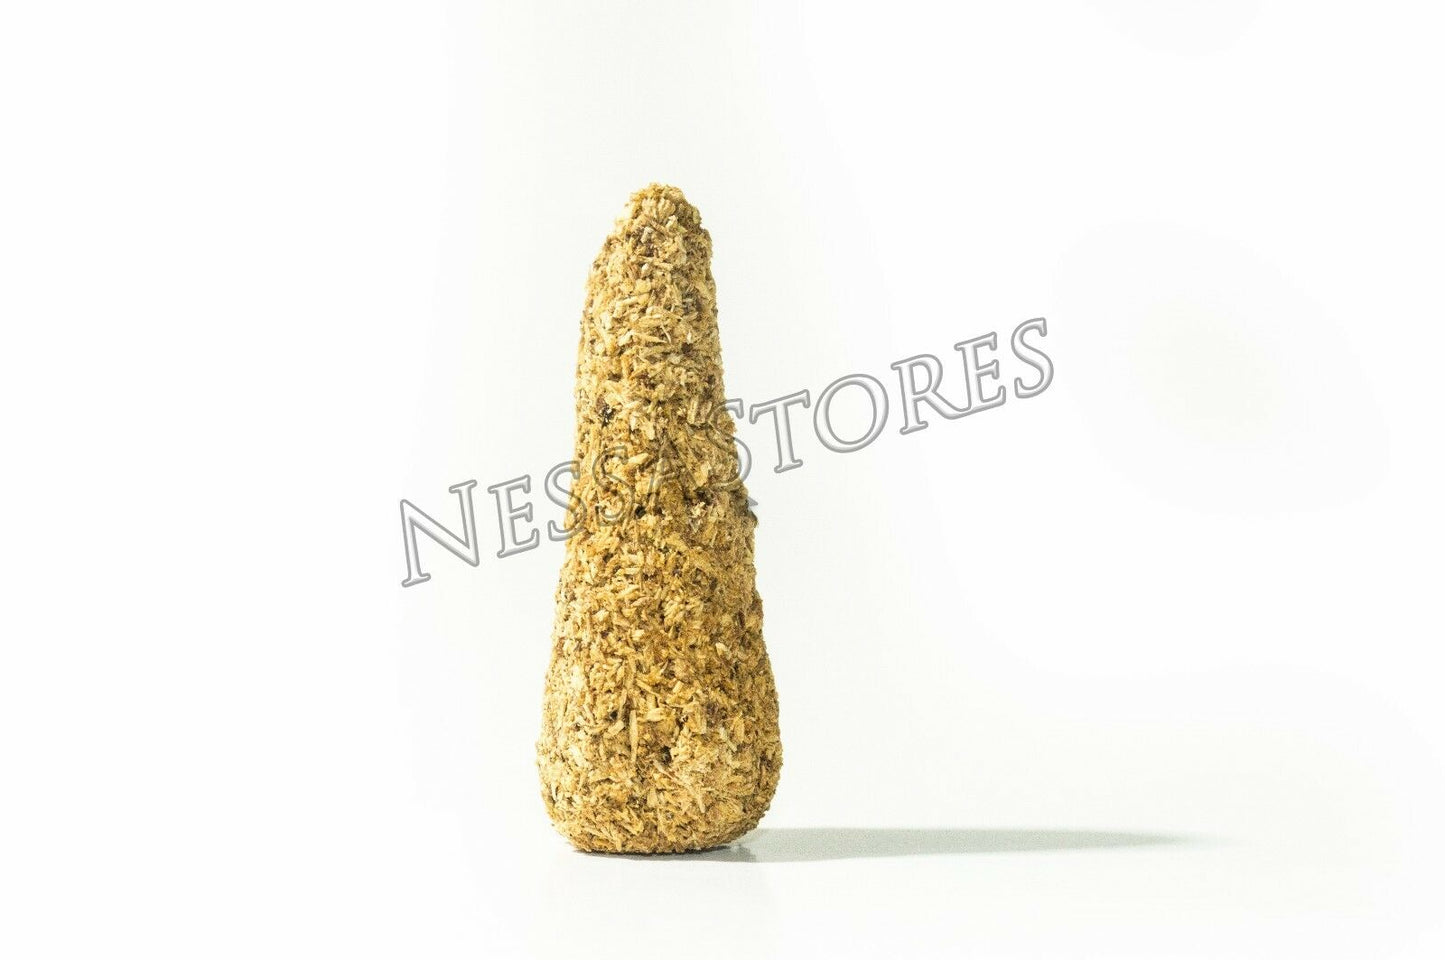 NessaStores Palo Santo Holy Wood Incense Cones 1 1/2" - 2" (70 pcs) #JC-063